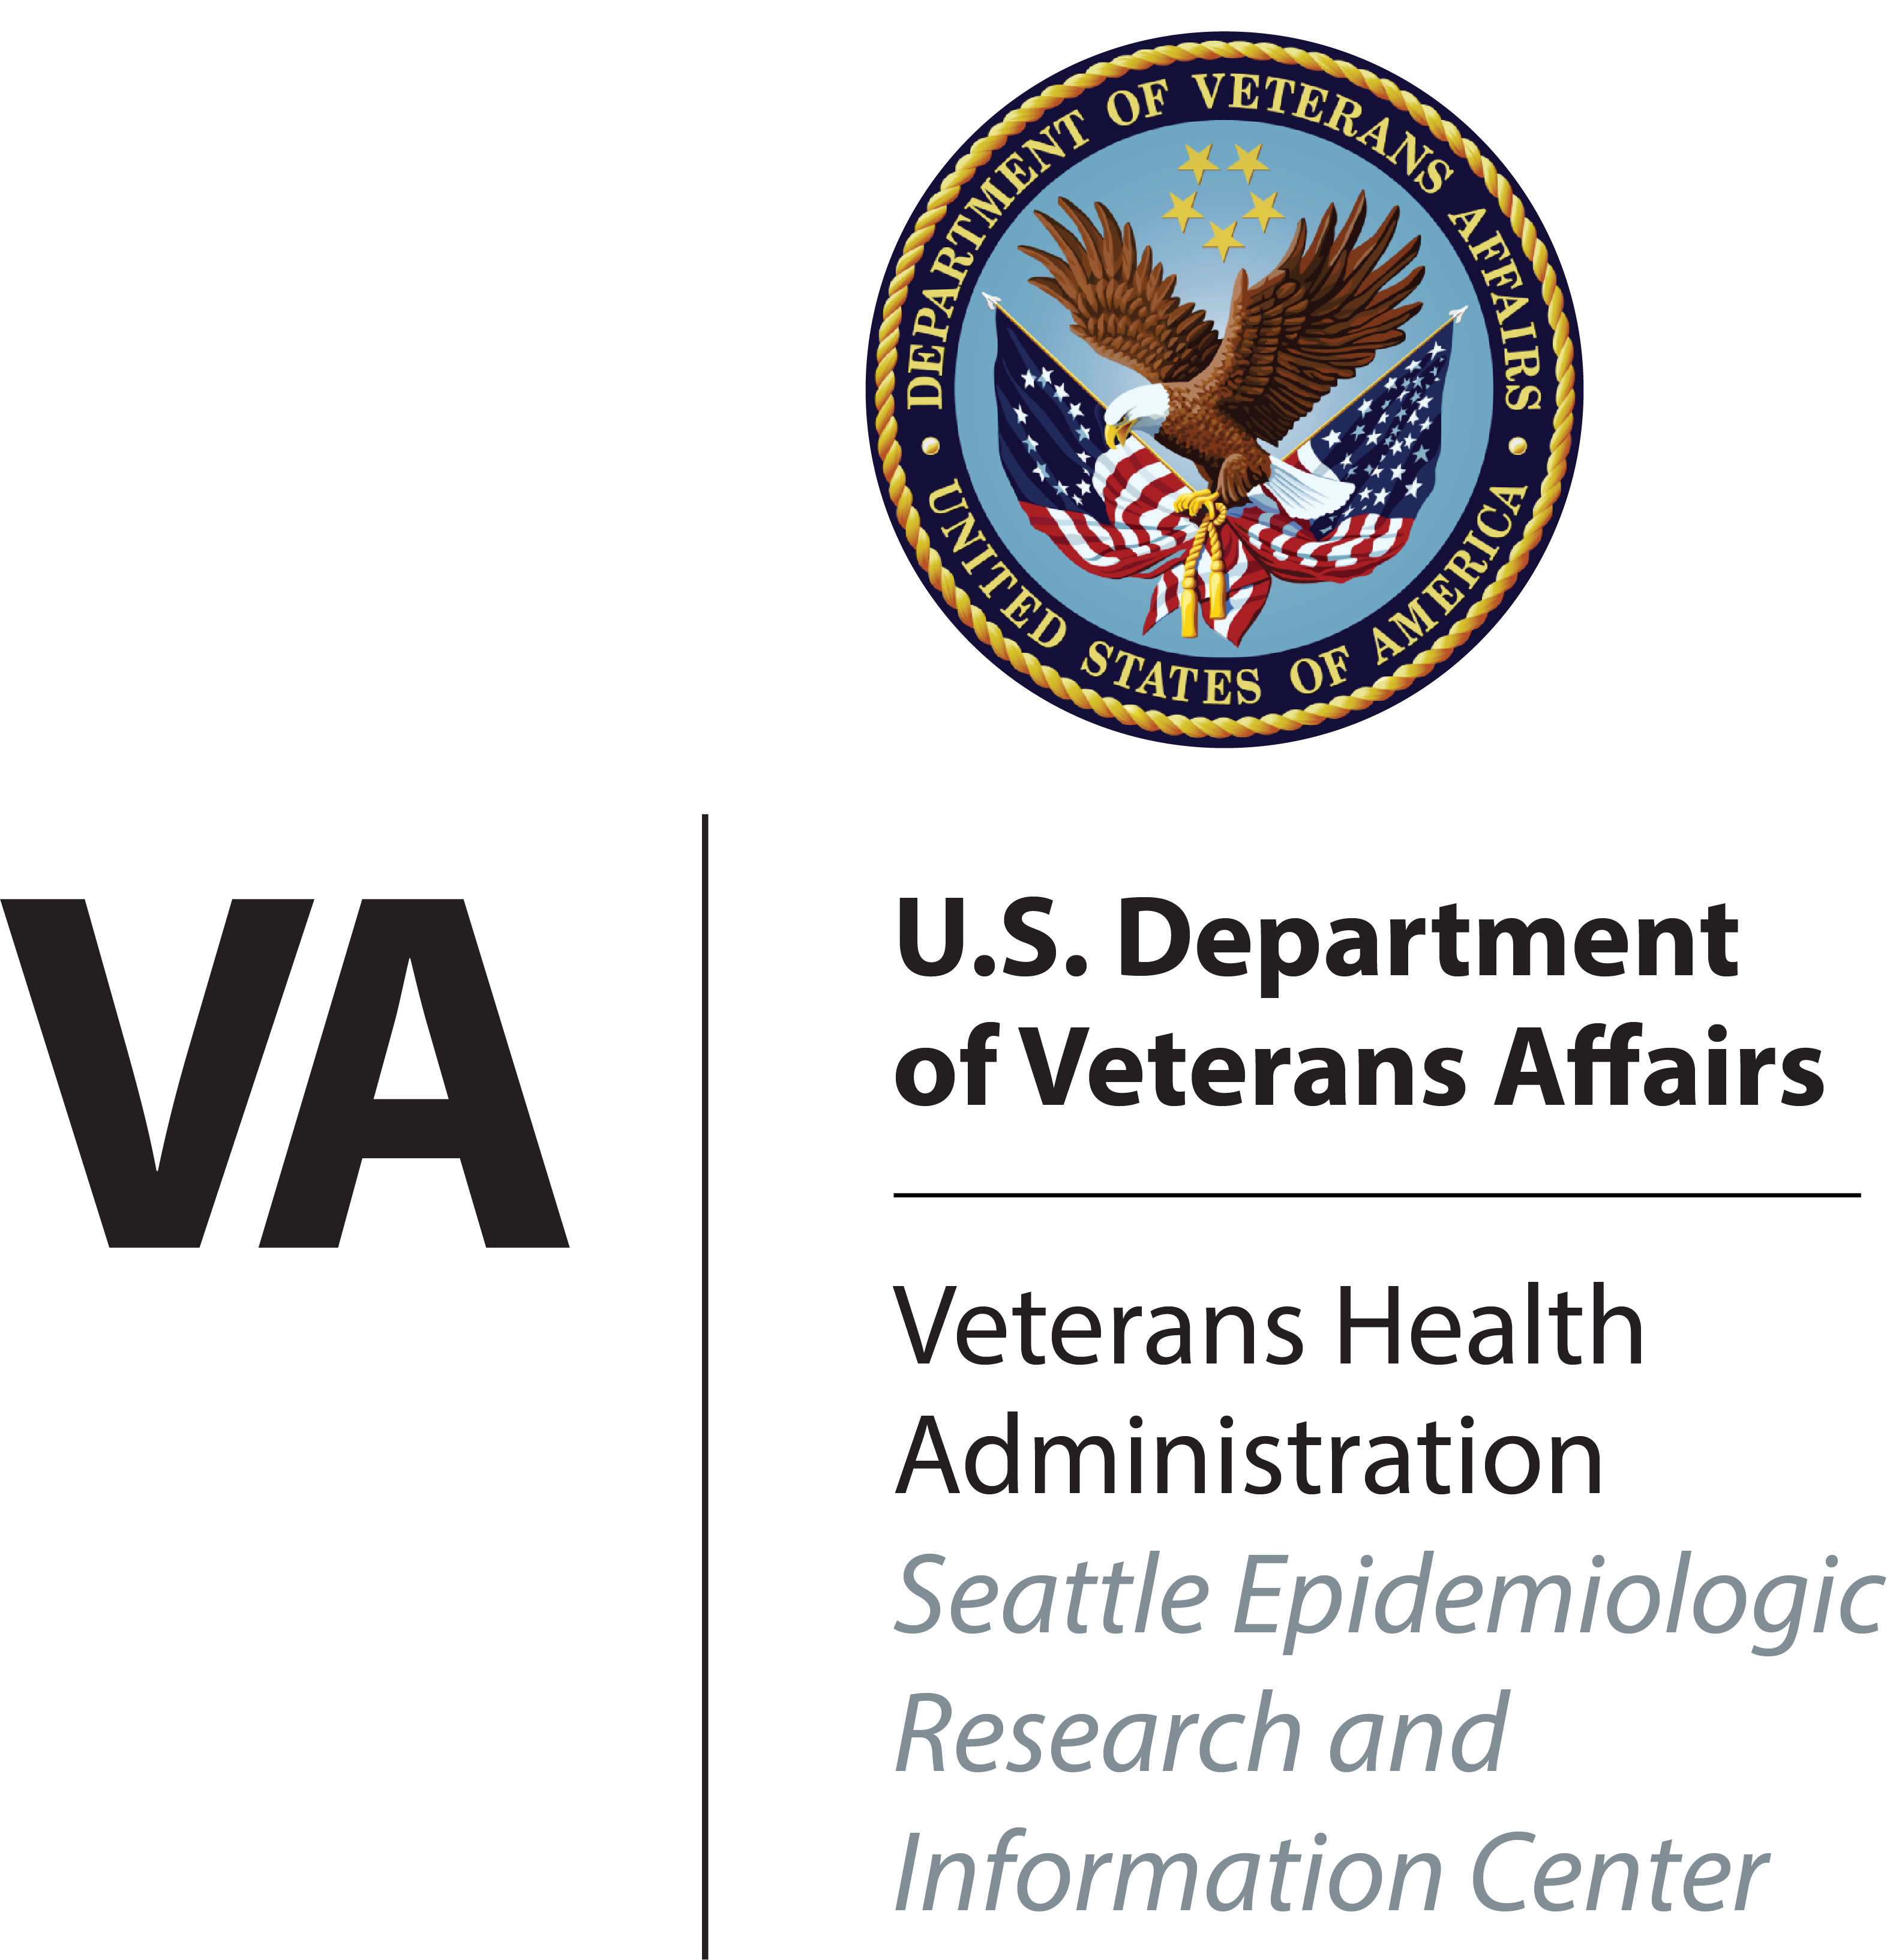 VA Puget Sound, Health Services Research & Development (HSR&D)